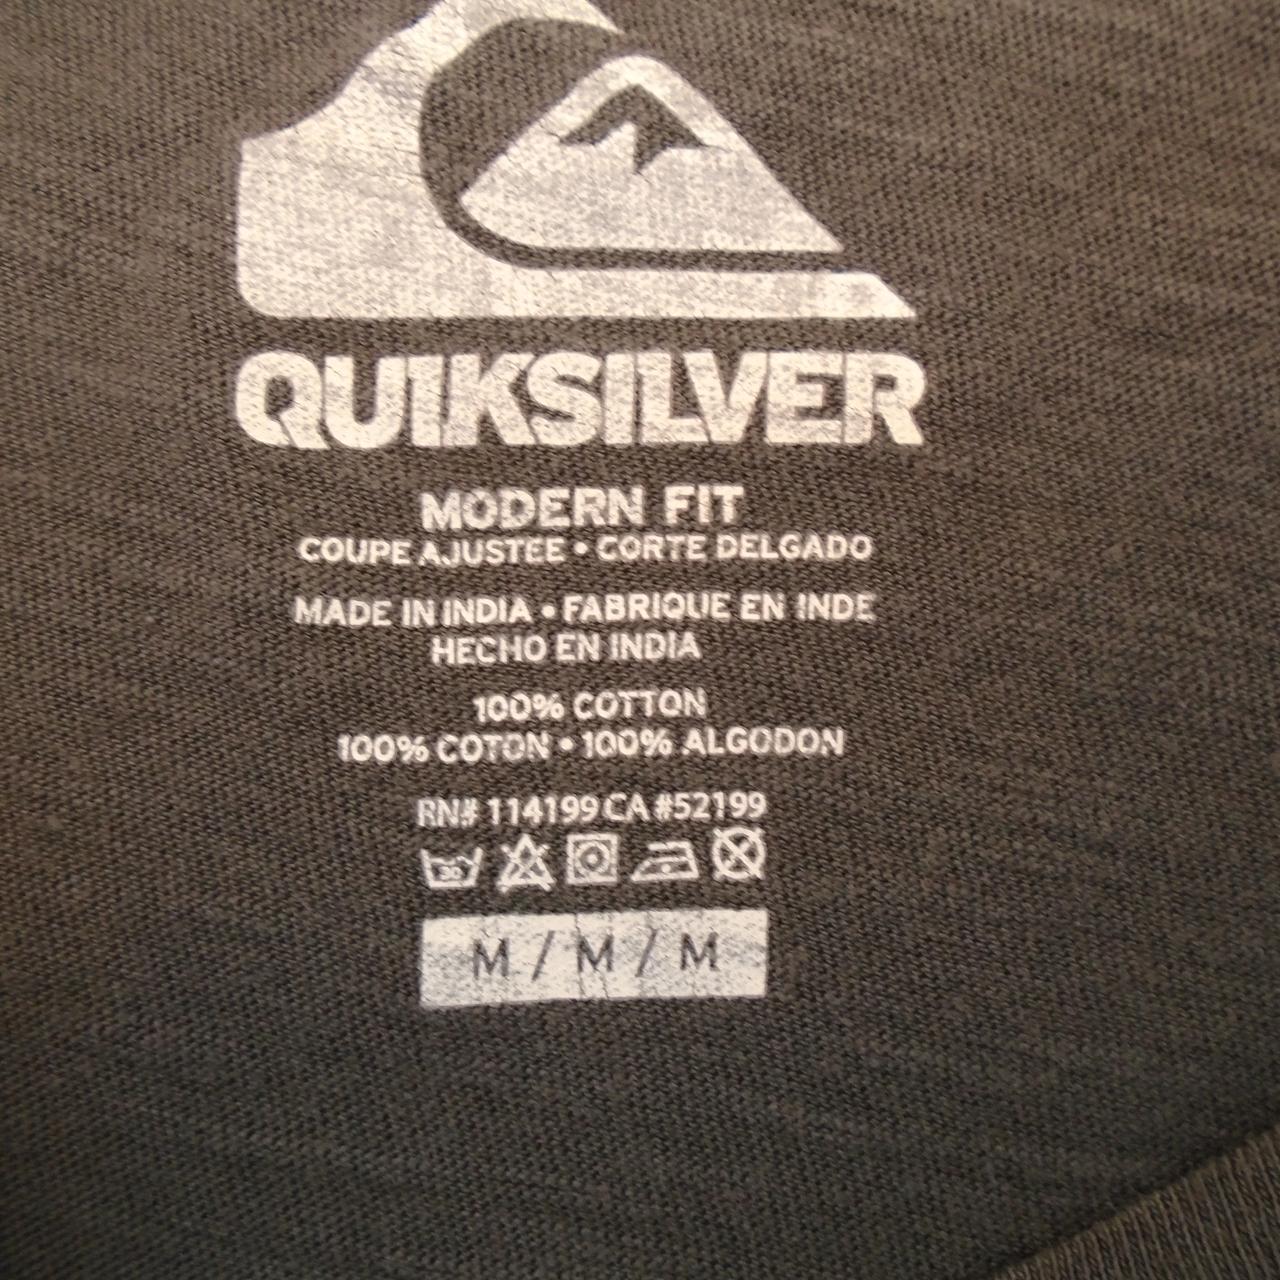 Men's T-Shirt Quiksilver. Grey. M. Used. Good